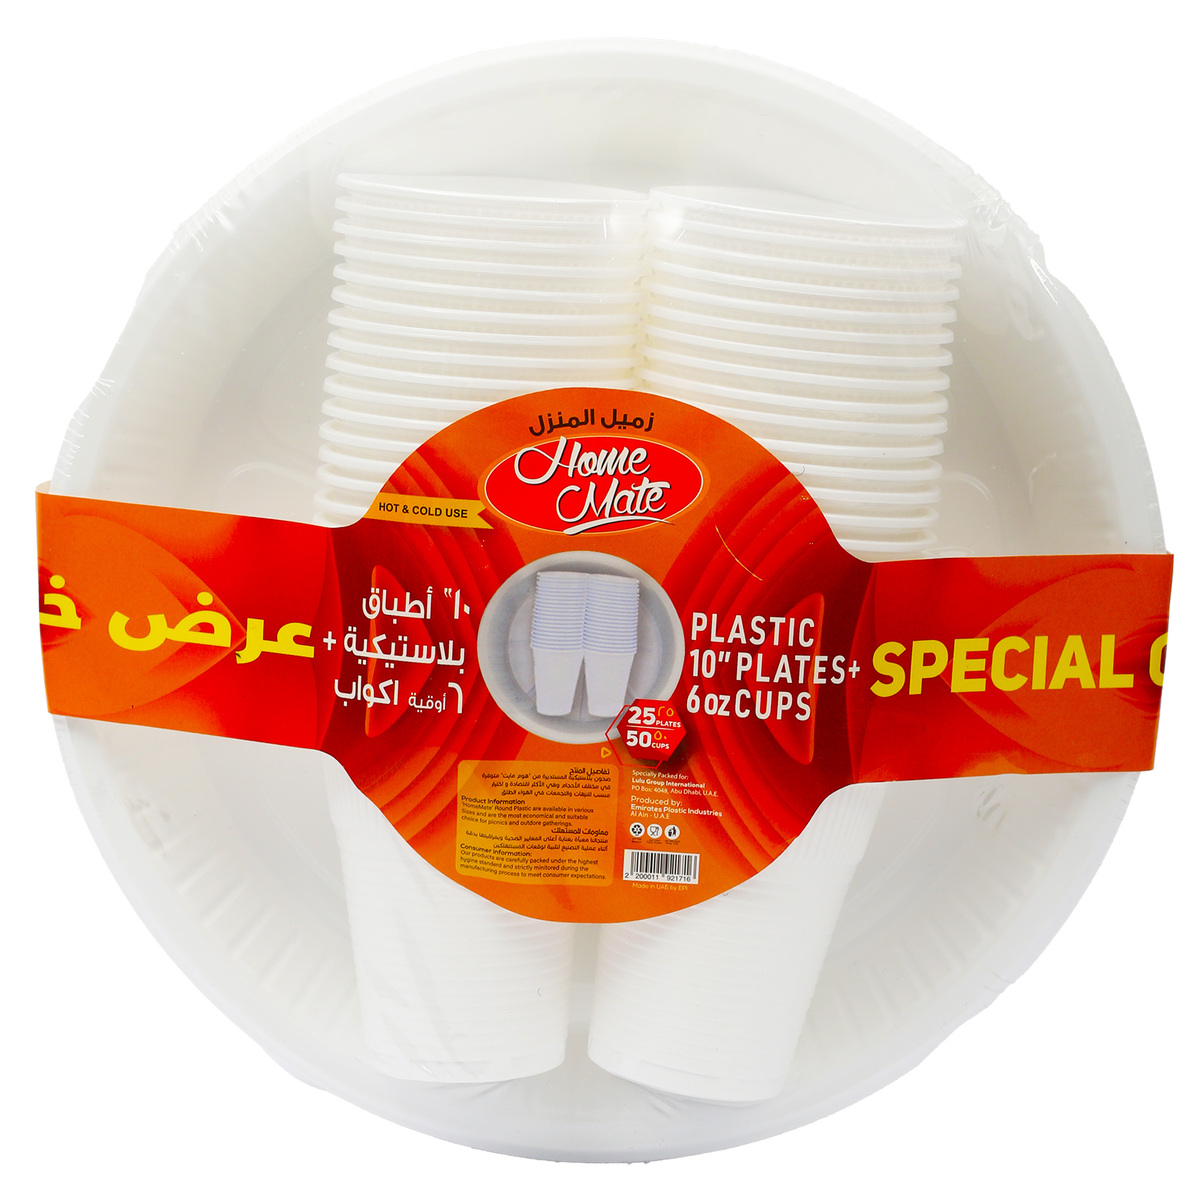 Home Mate Plastic Plates 10" 25 pcs + Cup 6 oz 50 pcs